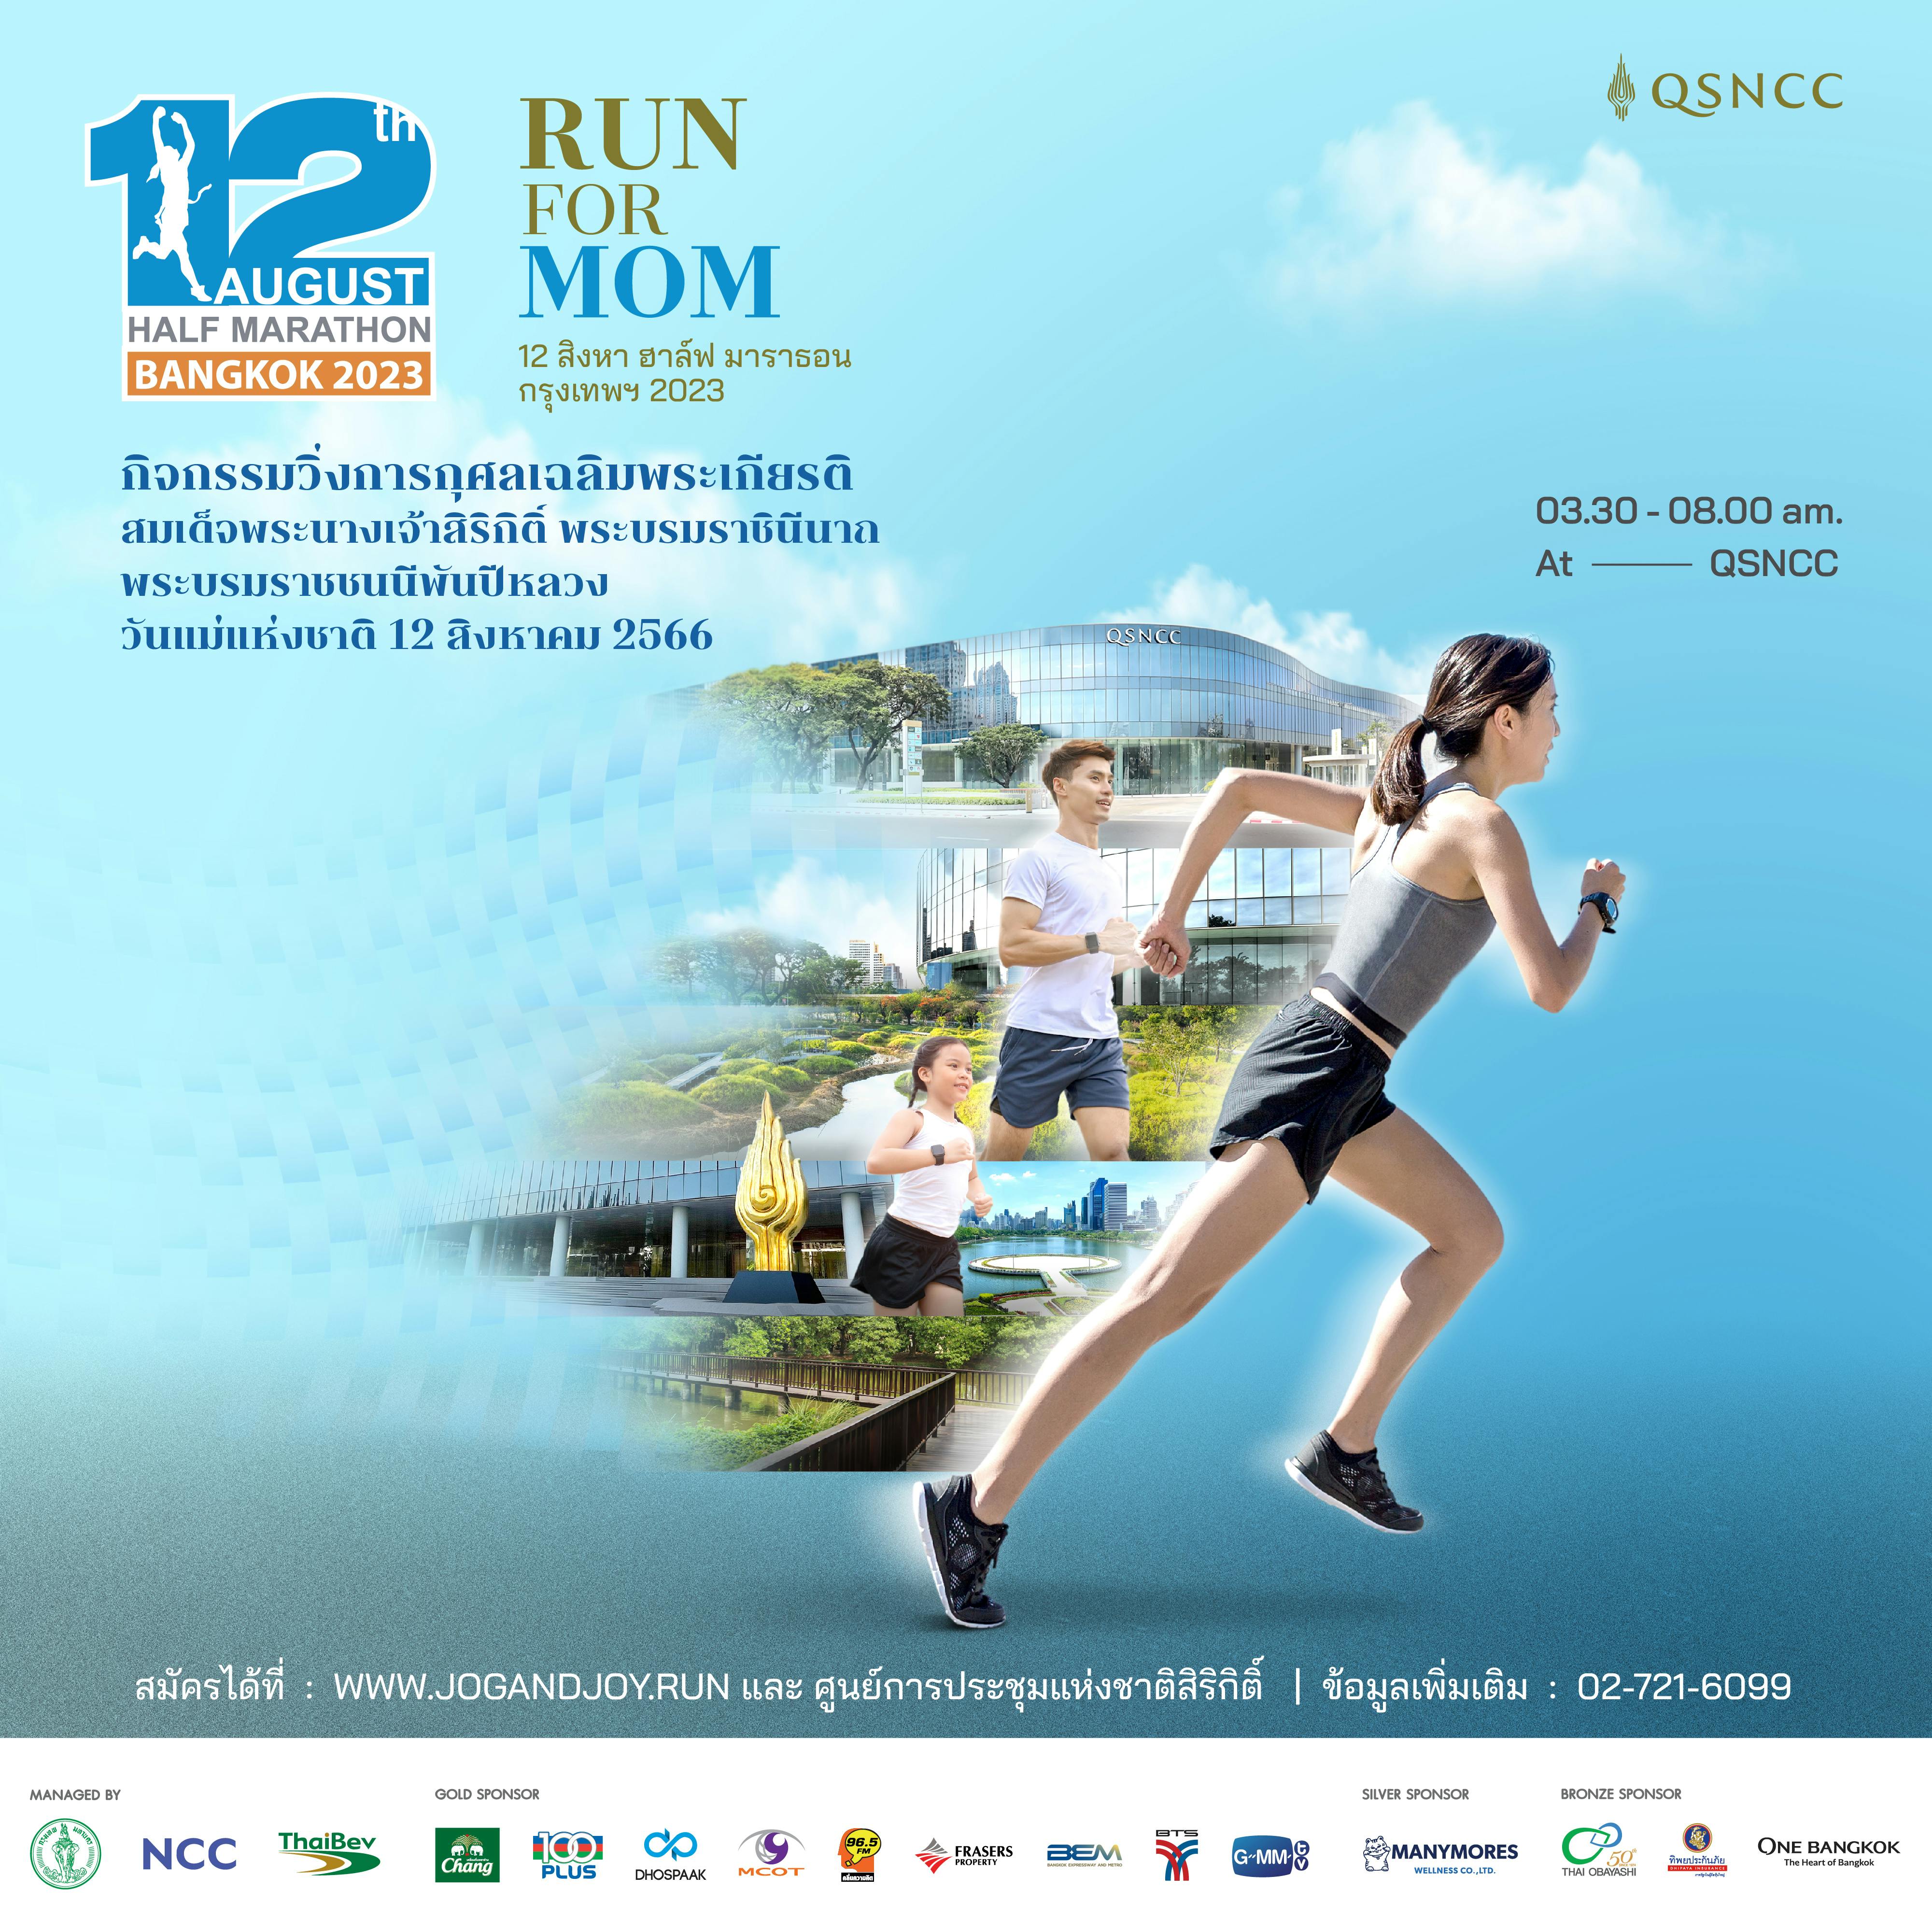 12 August Half Marathon Bangkok 2023